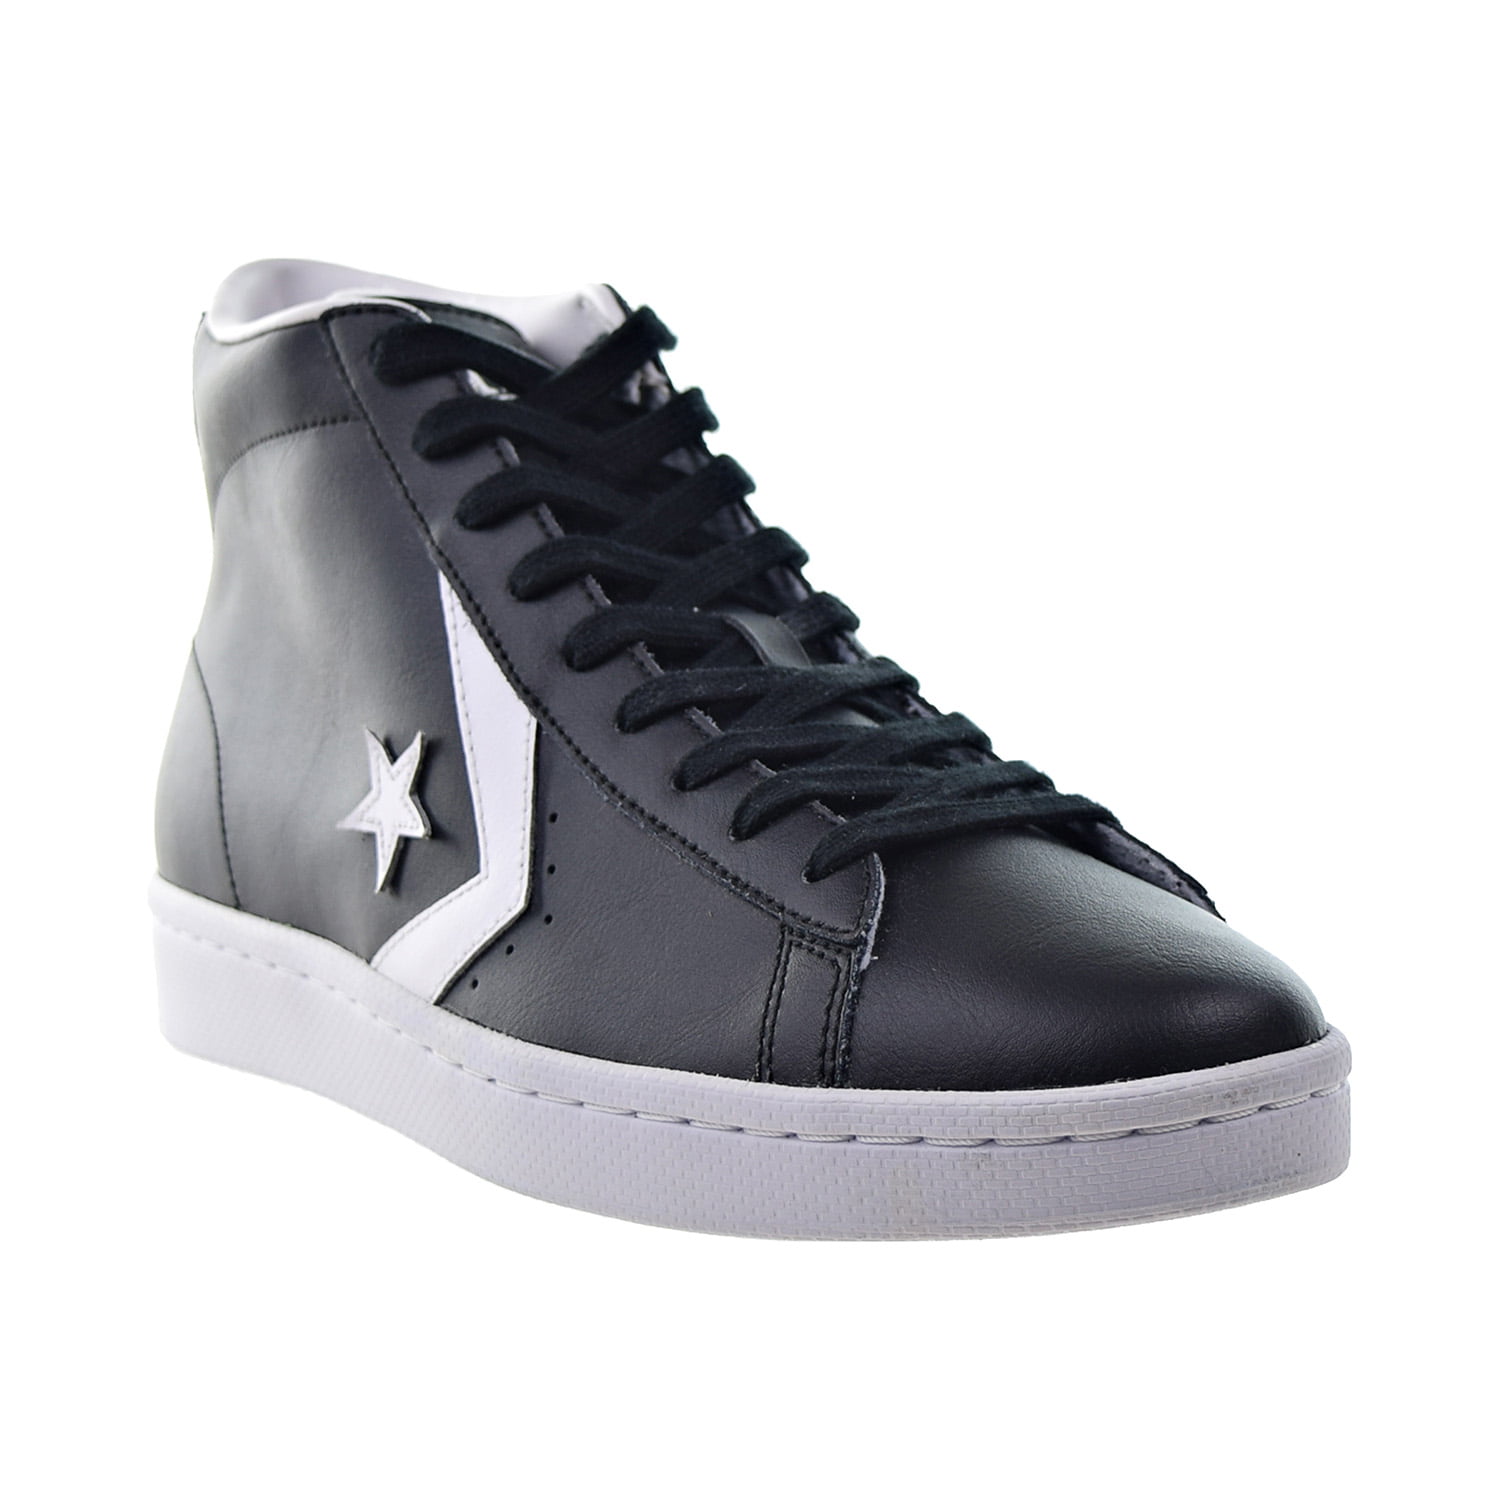 Faciliteter Slumber Alperne Converse Pro Leather 76 Mid Men's Shoes Black-White 157717c - Walmart.com